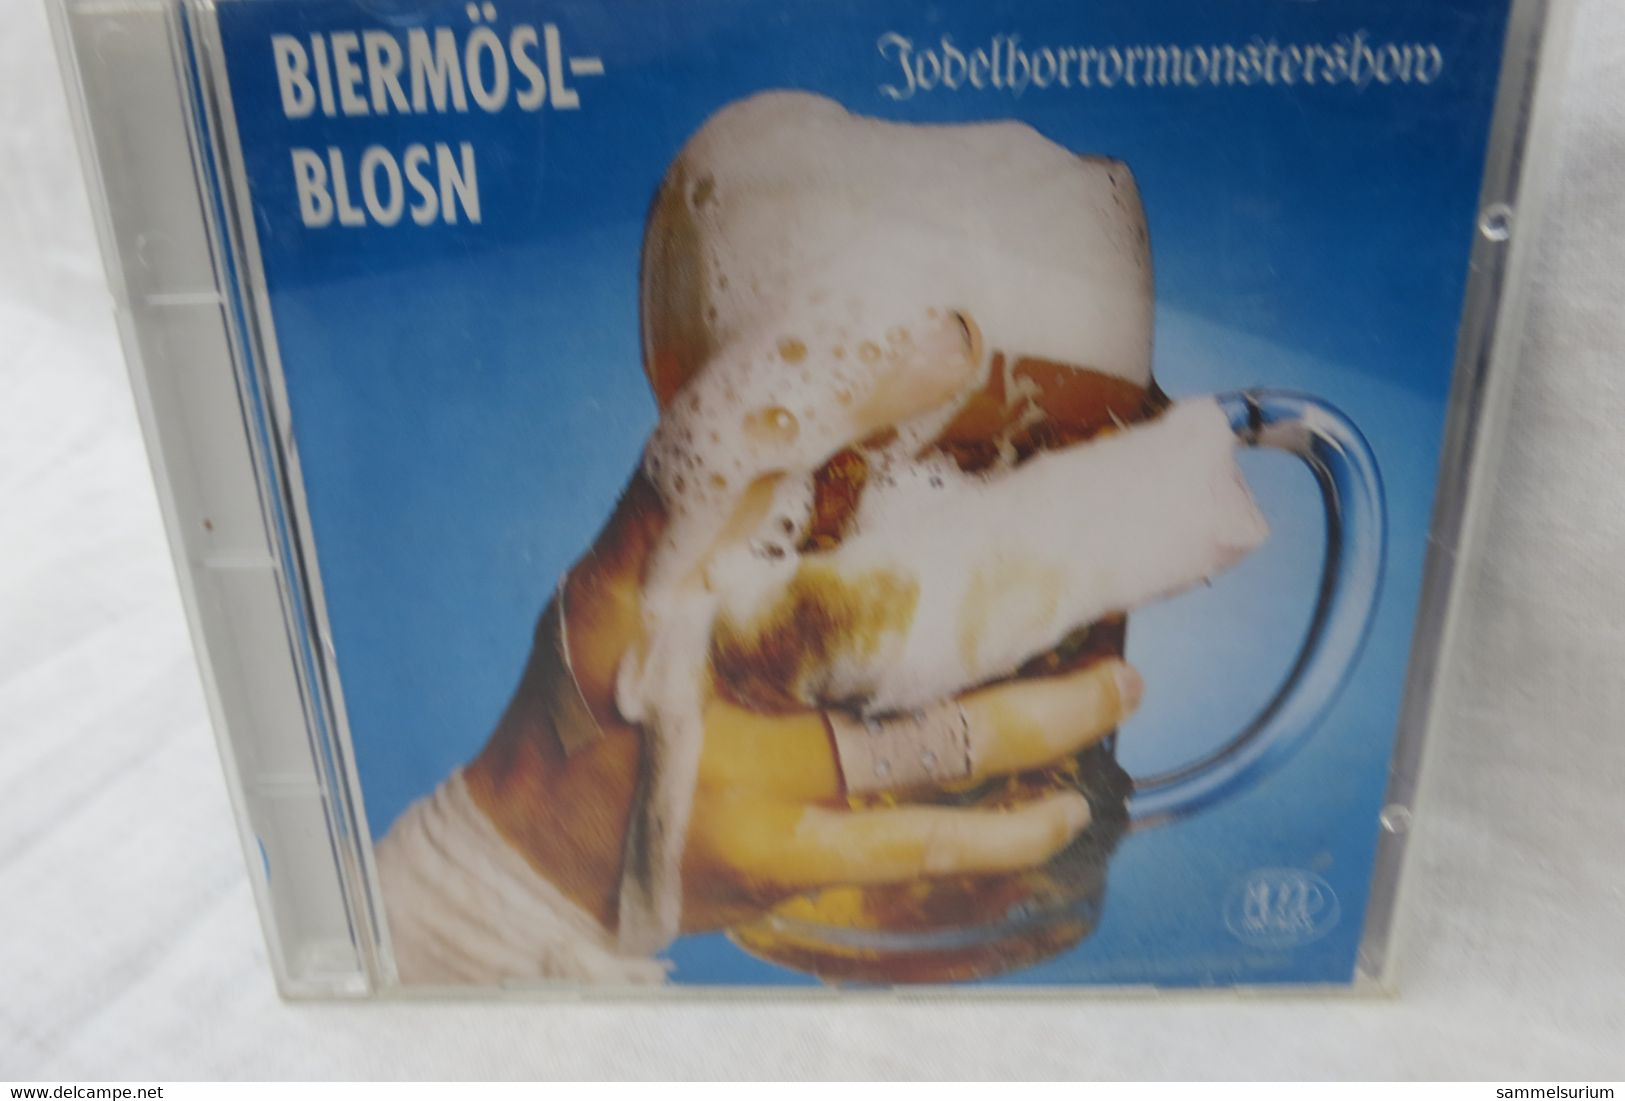 CD "Biermösl Blosn" Jodelhorrormonstershow - Comiche